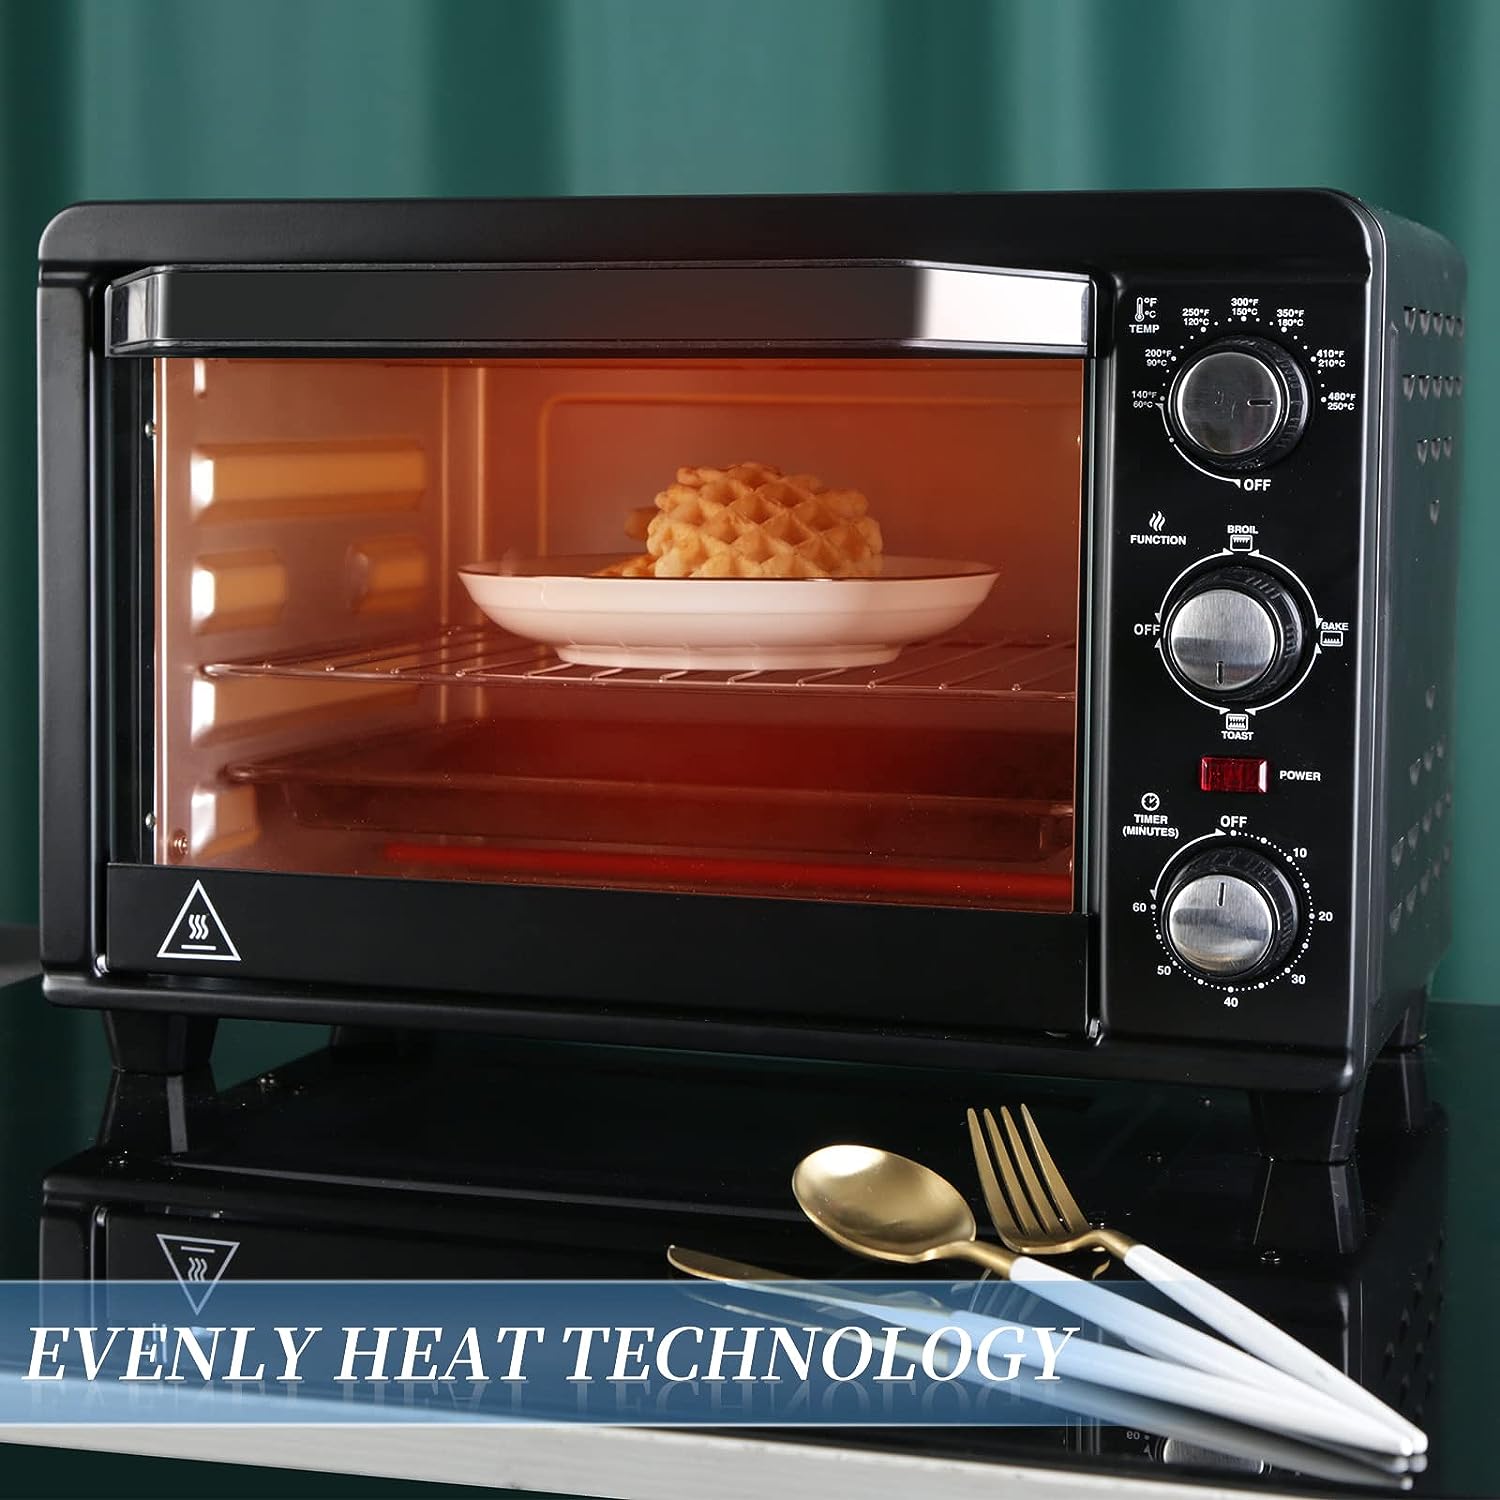 Healsmart Toaster Oven Review